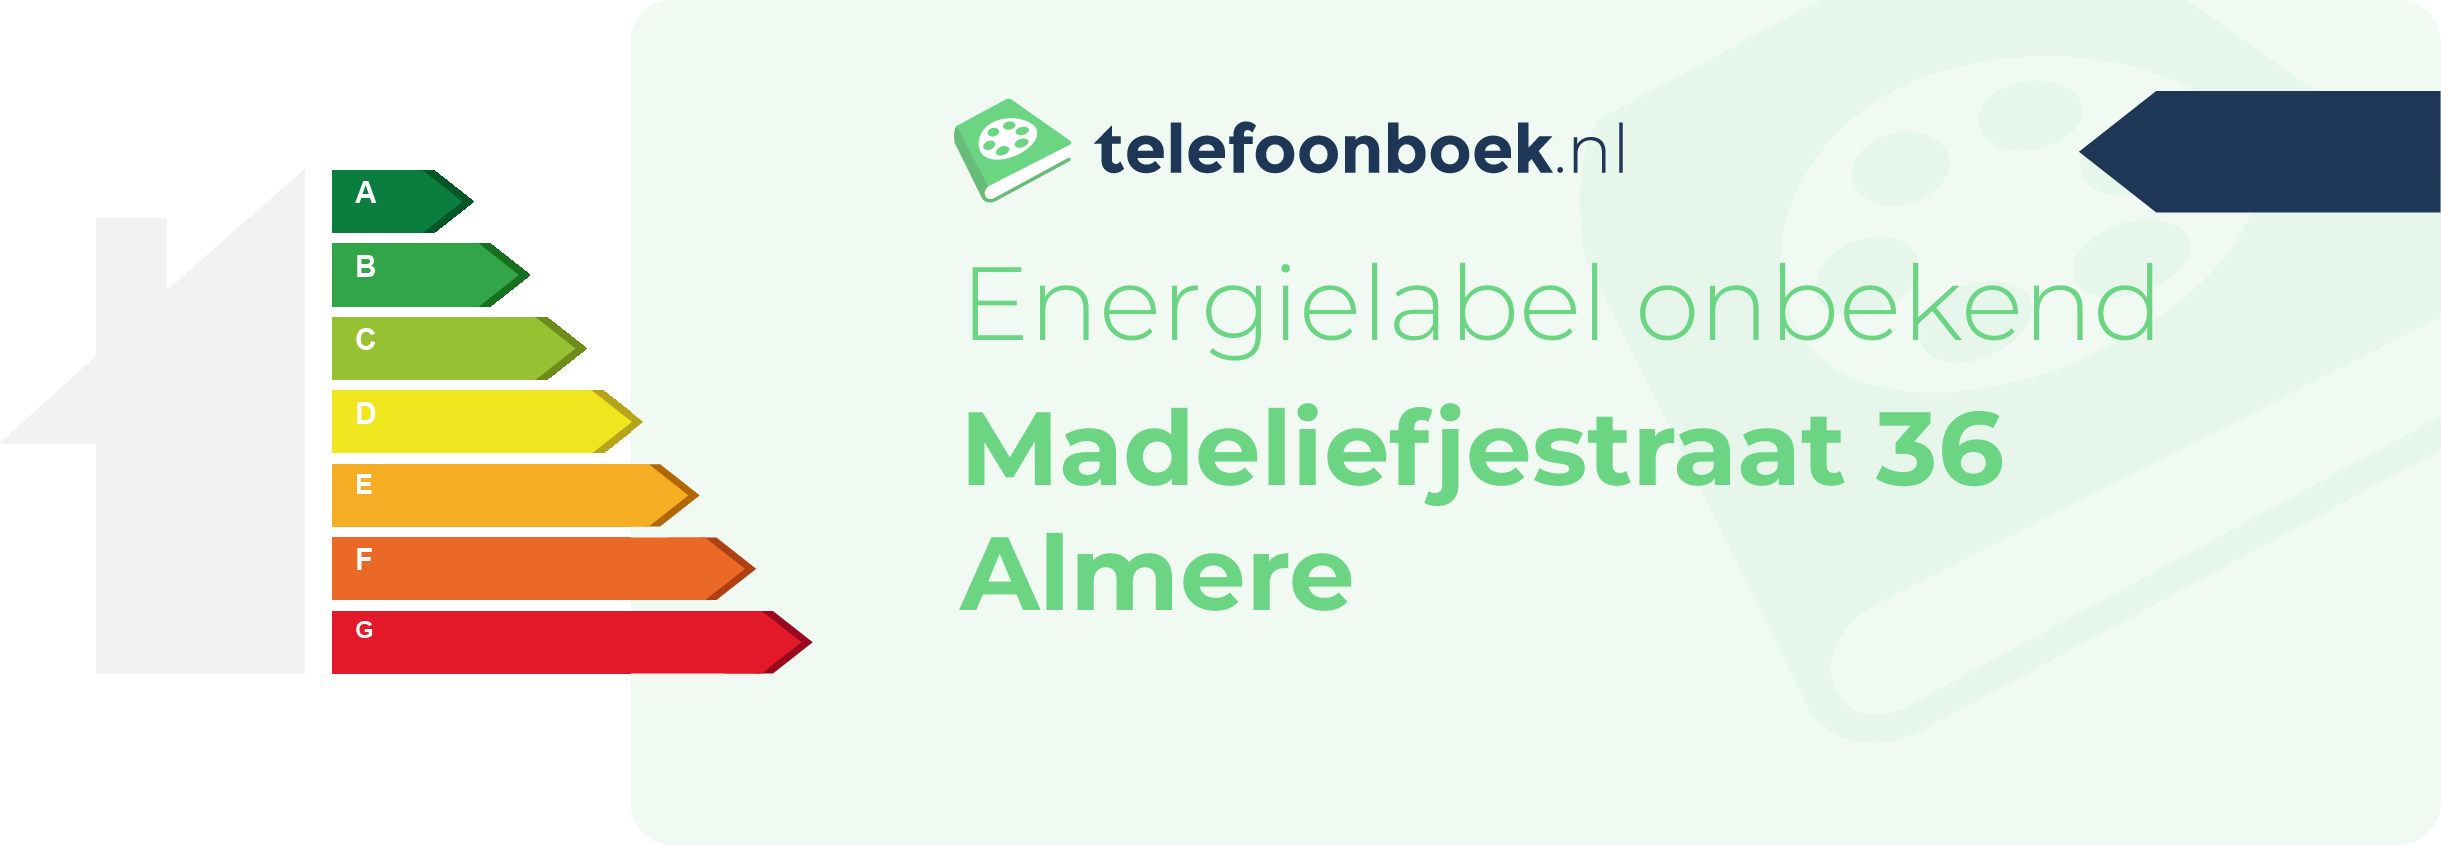 Energielabel Madeliefjestraat 36 Almere